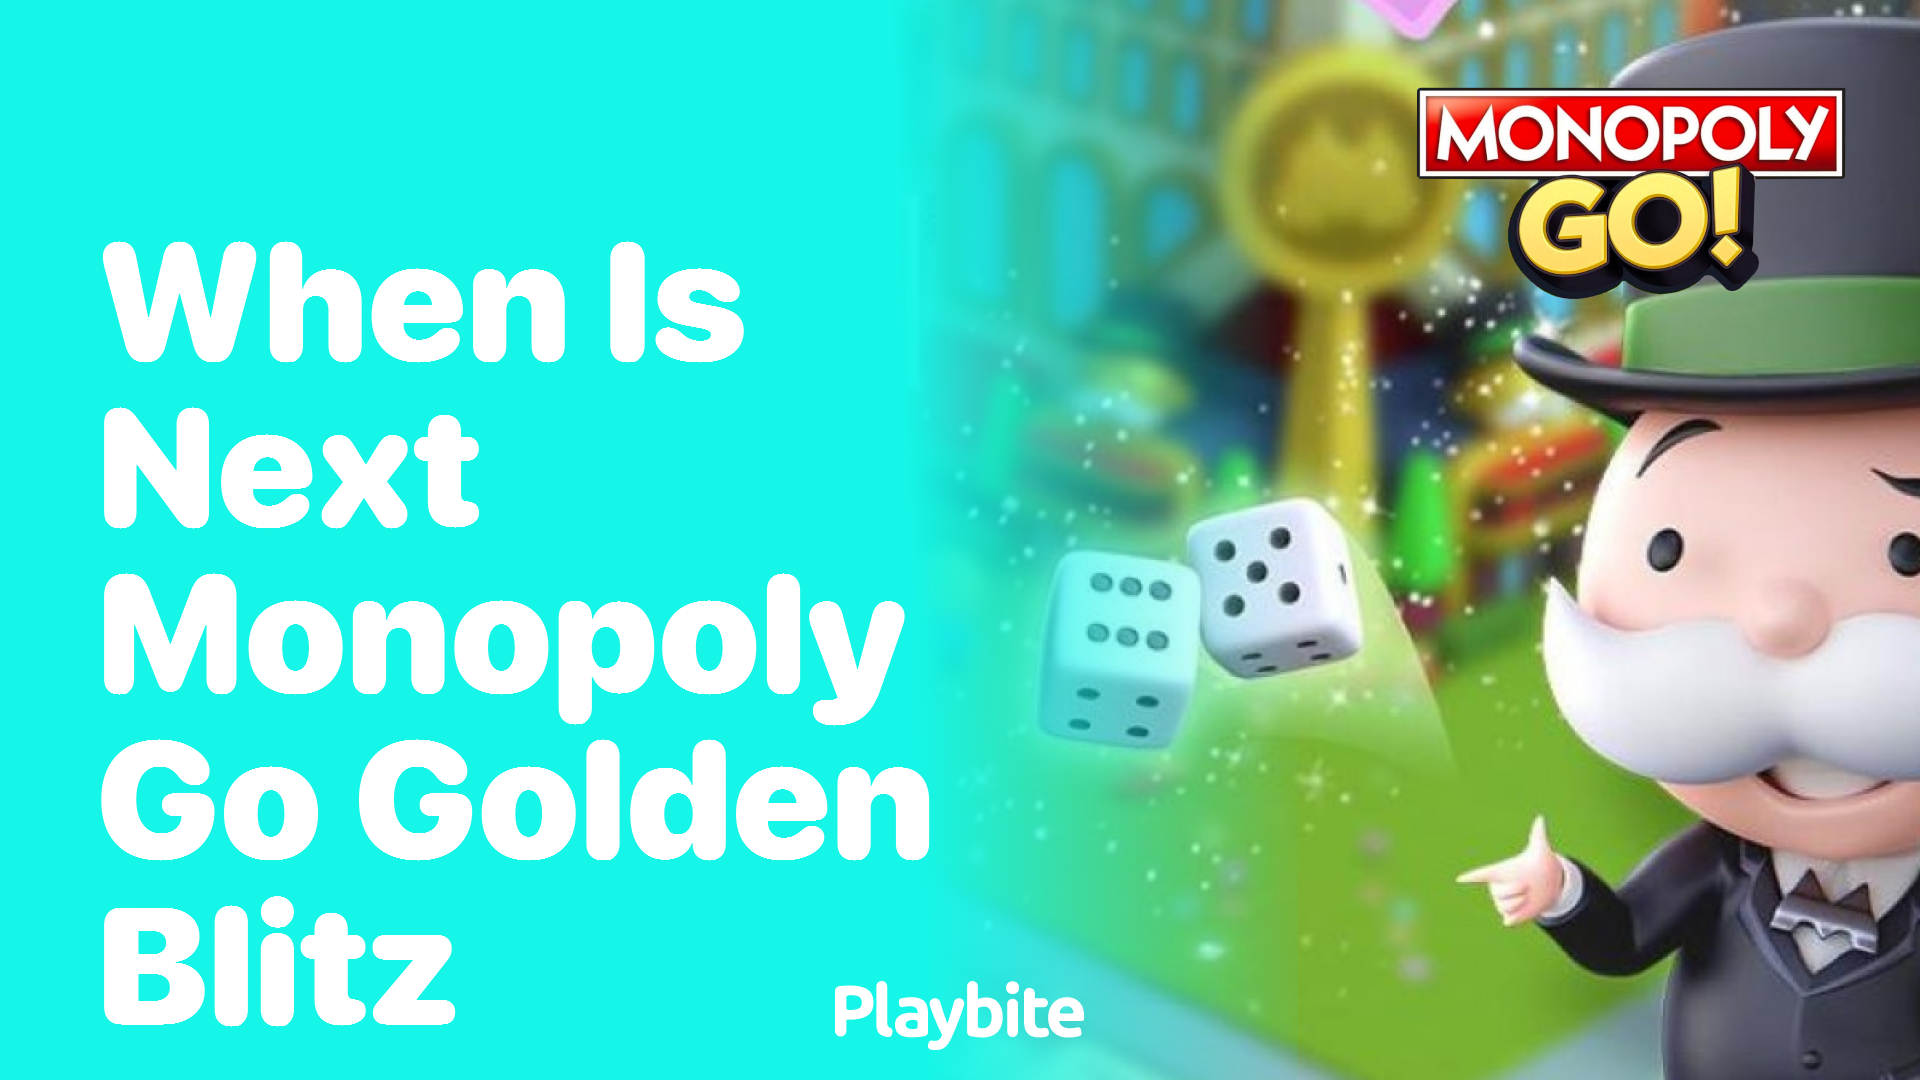 When Is the Next Monopoly Go Golden Blitz?